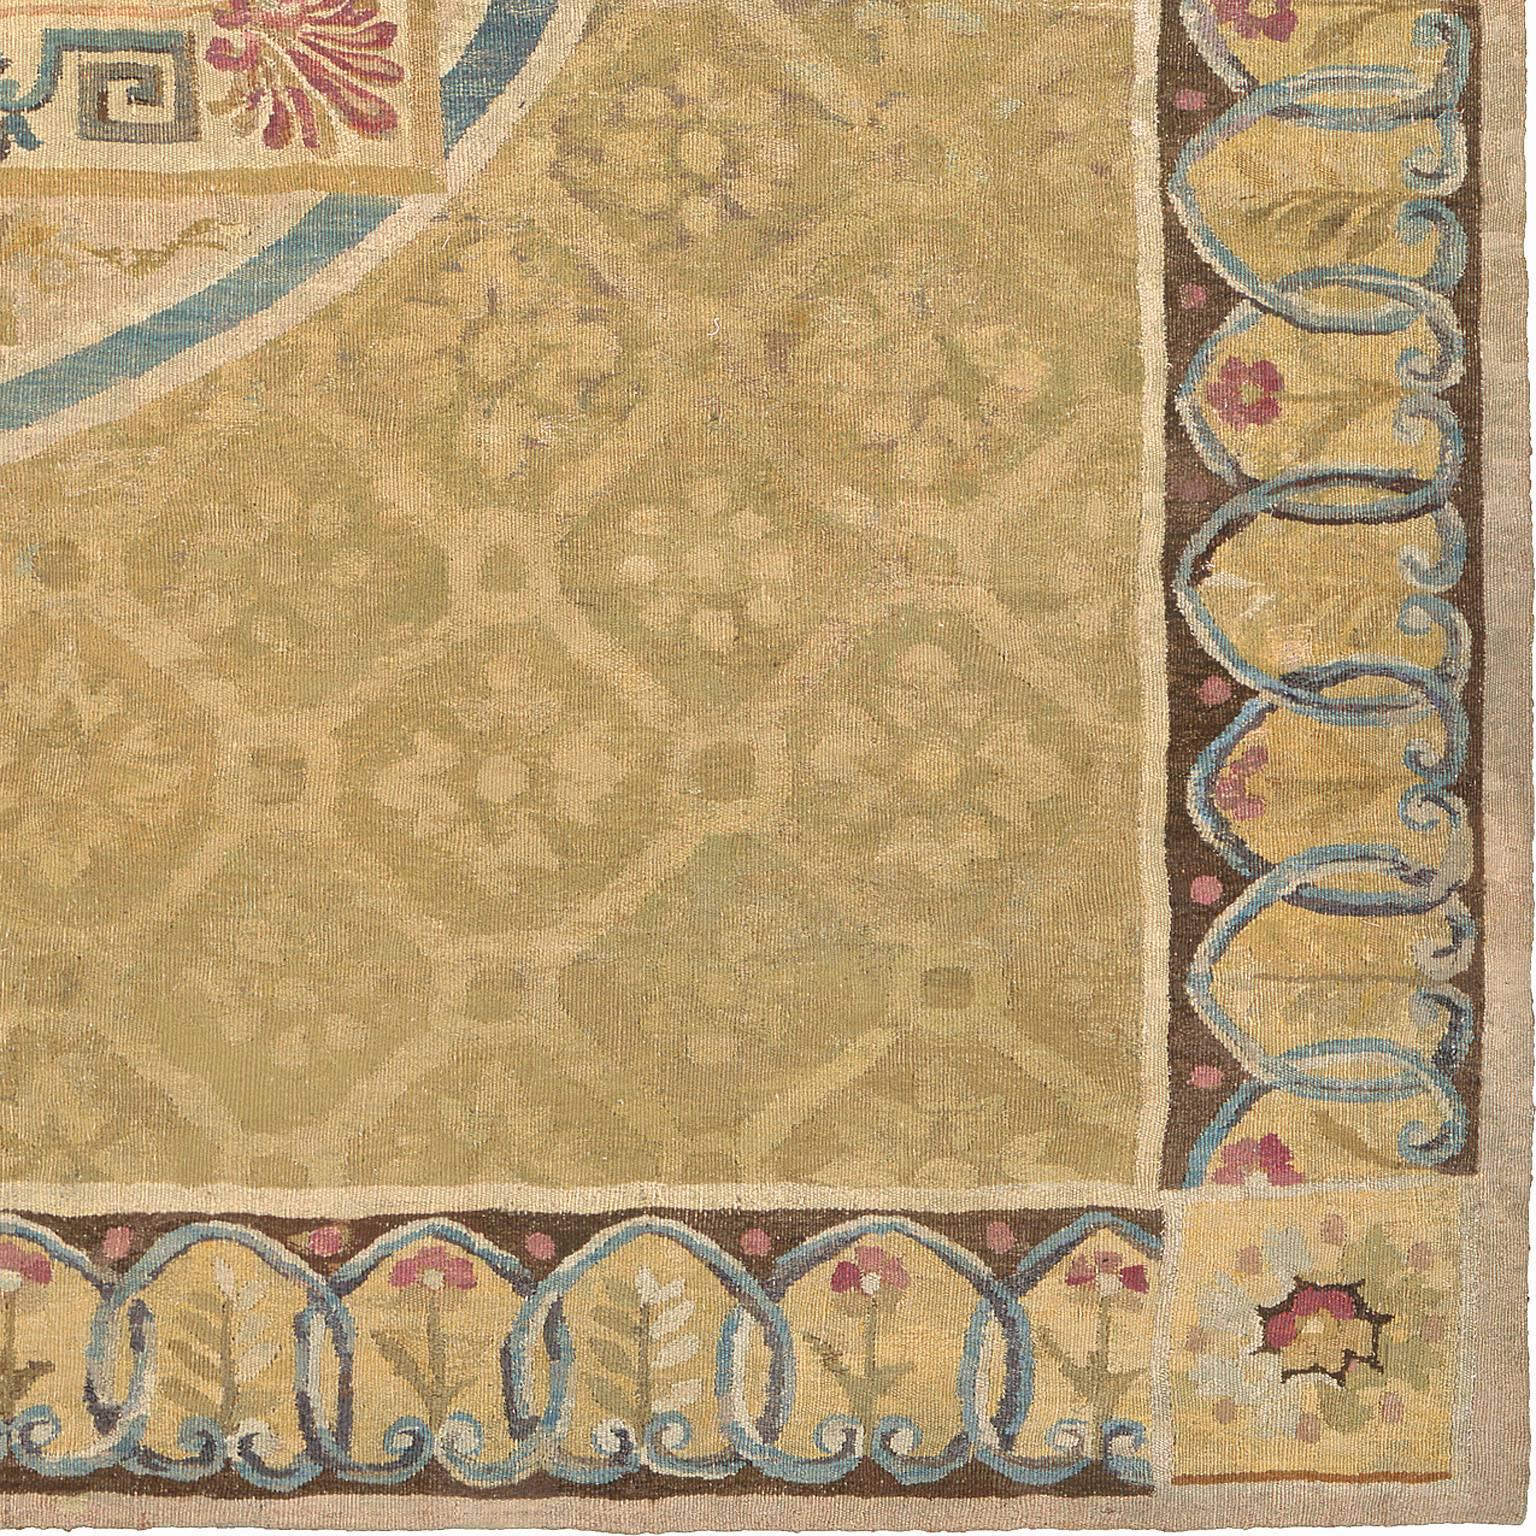 Late 18th century Aubusson carpet.
Directoire.